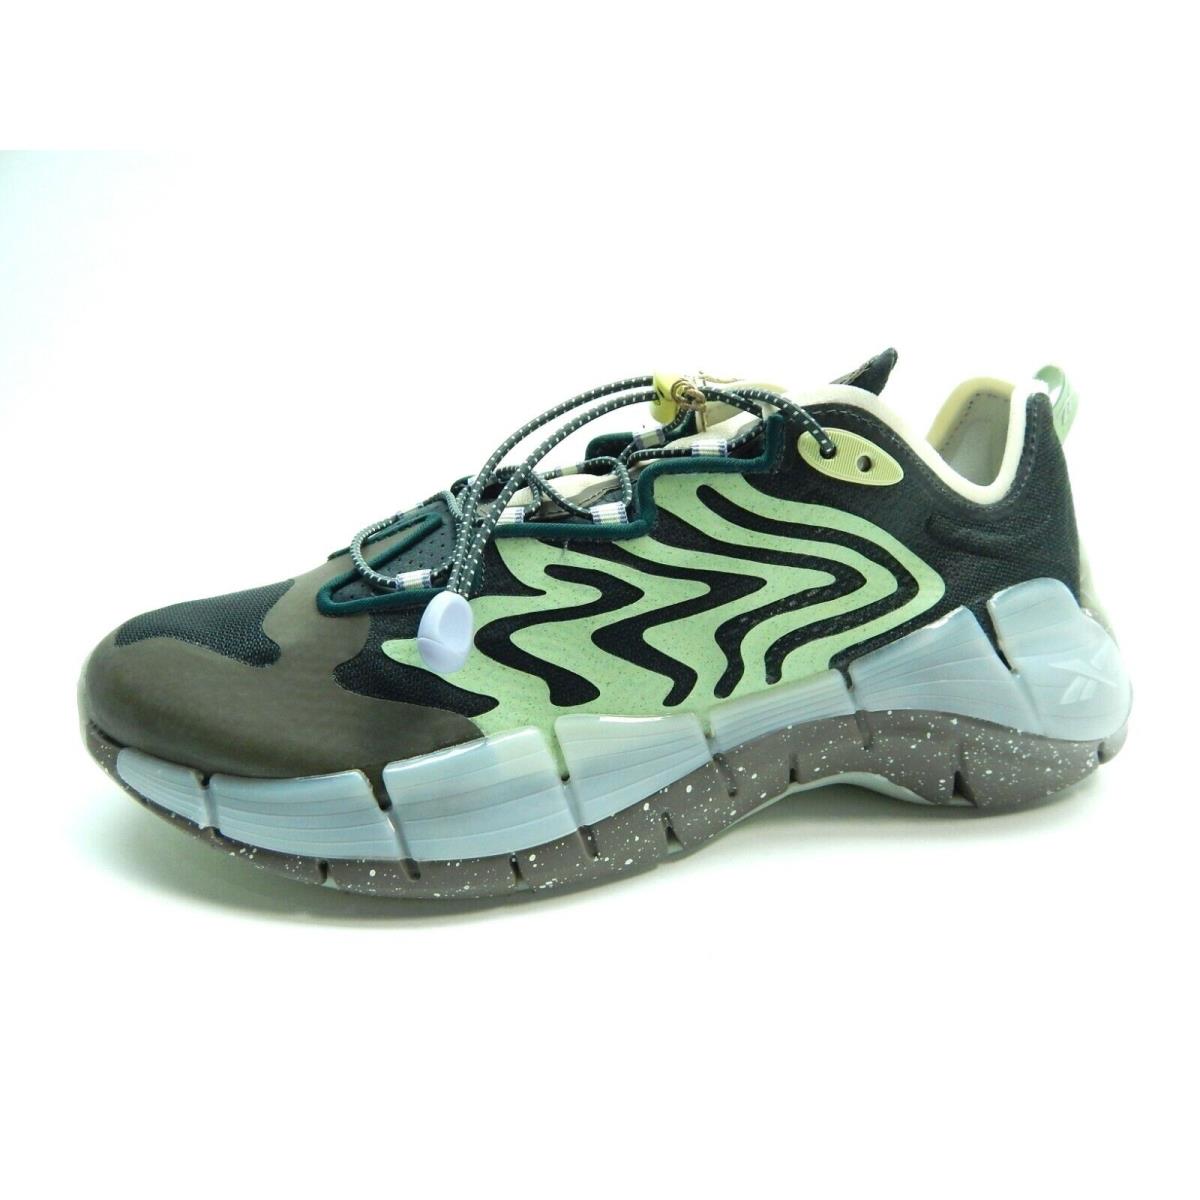 Reebok Zig Kinetica II Running S23890 Men Shoes Size 9.5